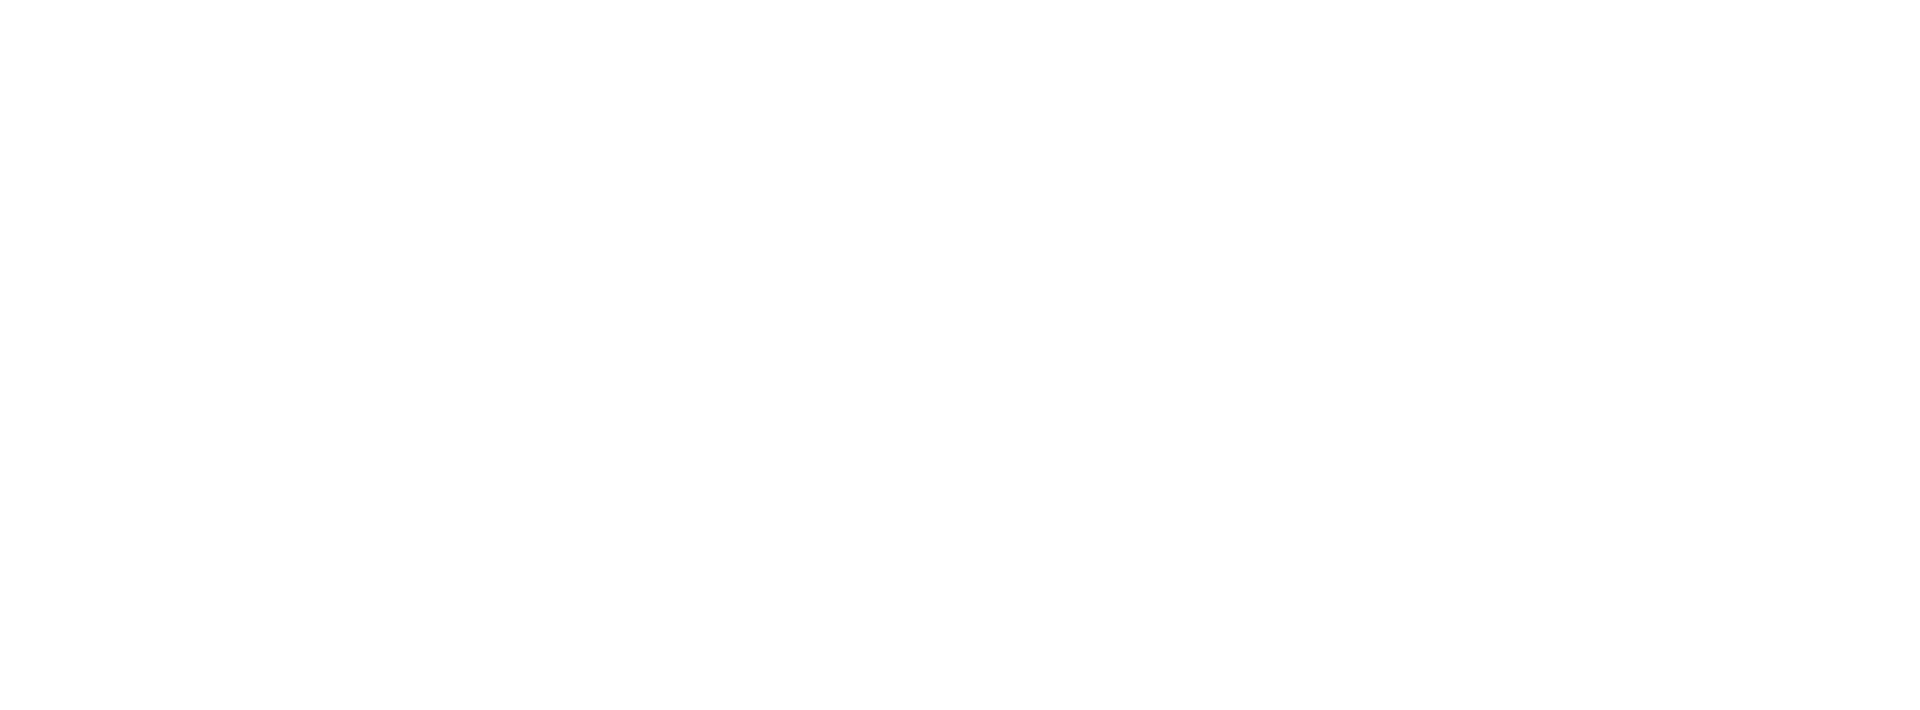 The Giant Companies